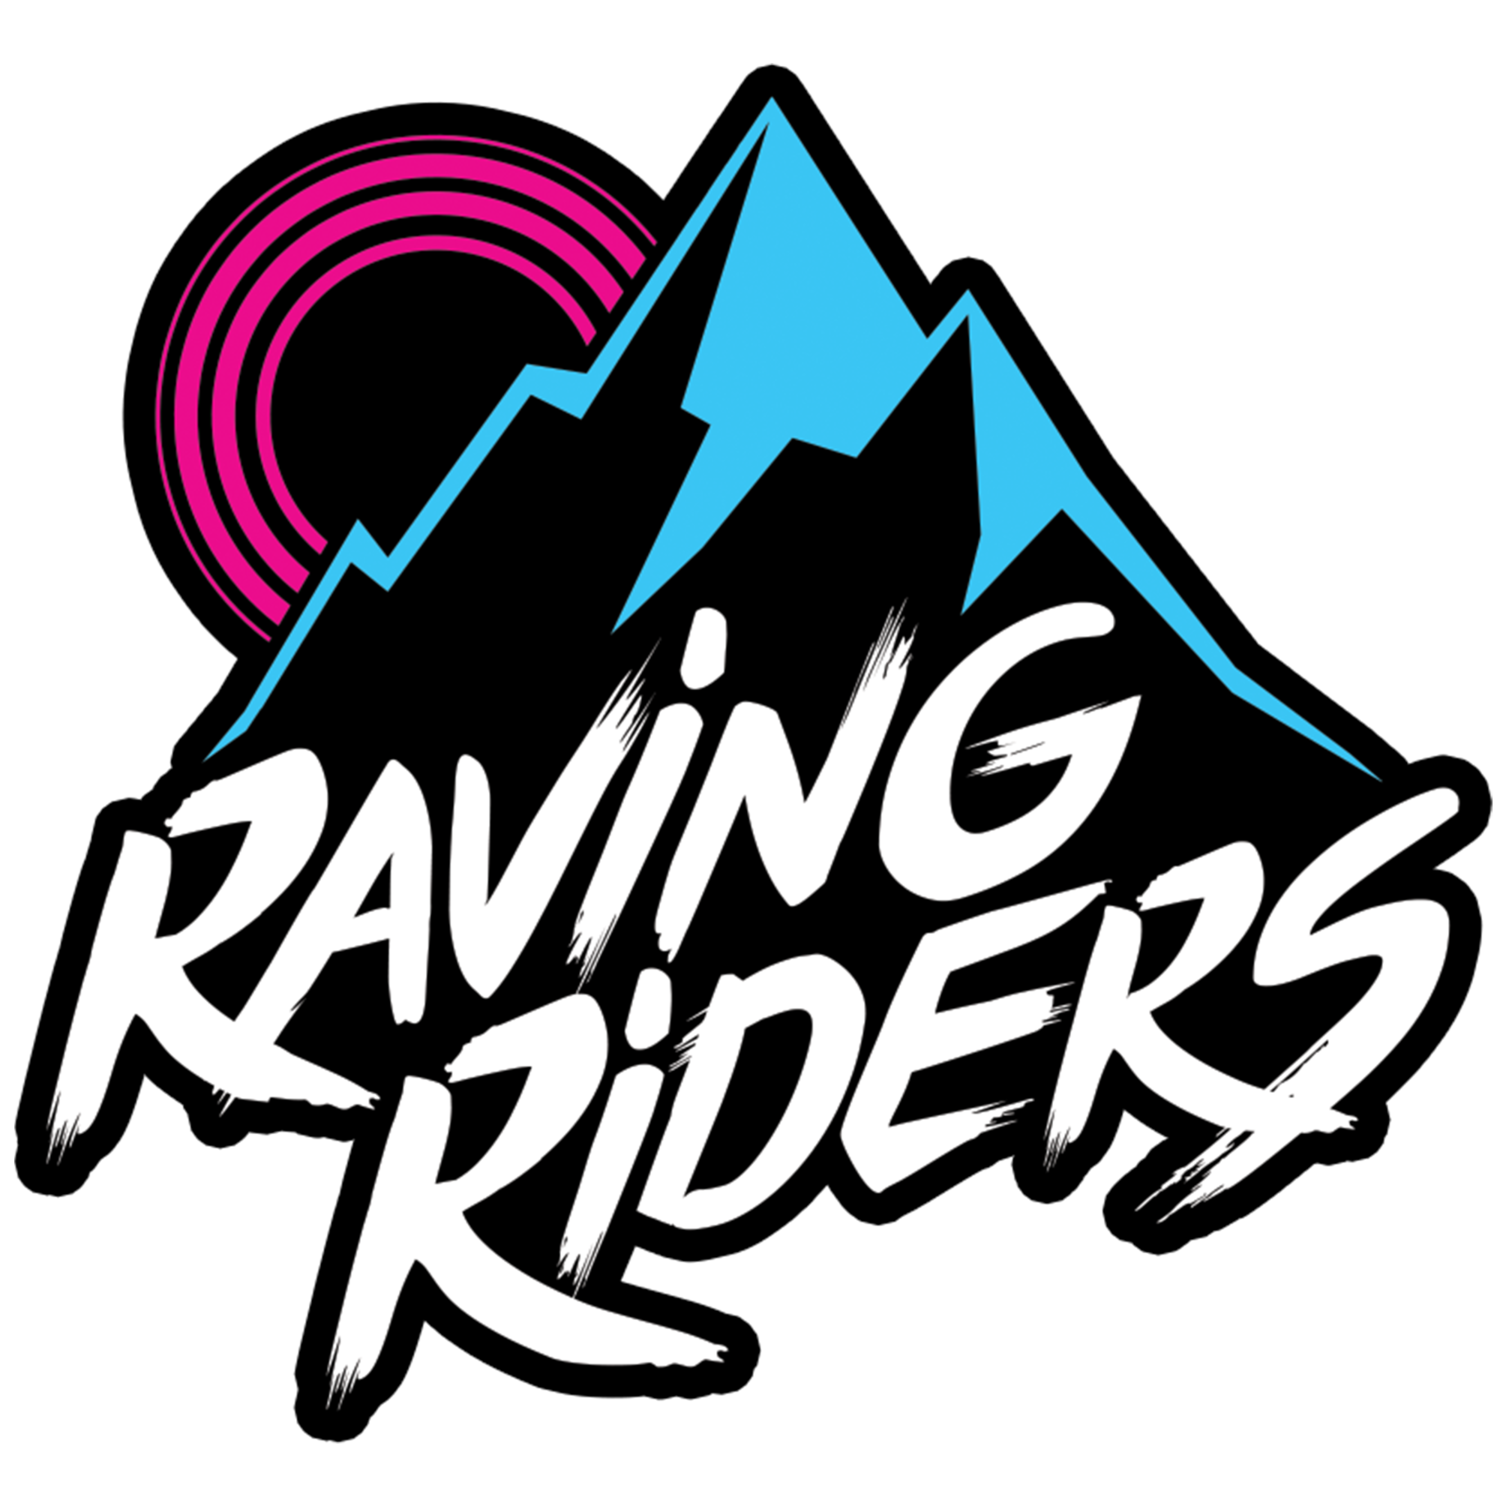 Raving Riders